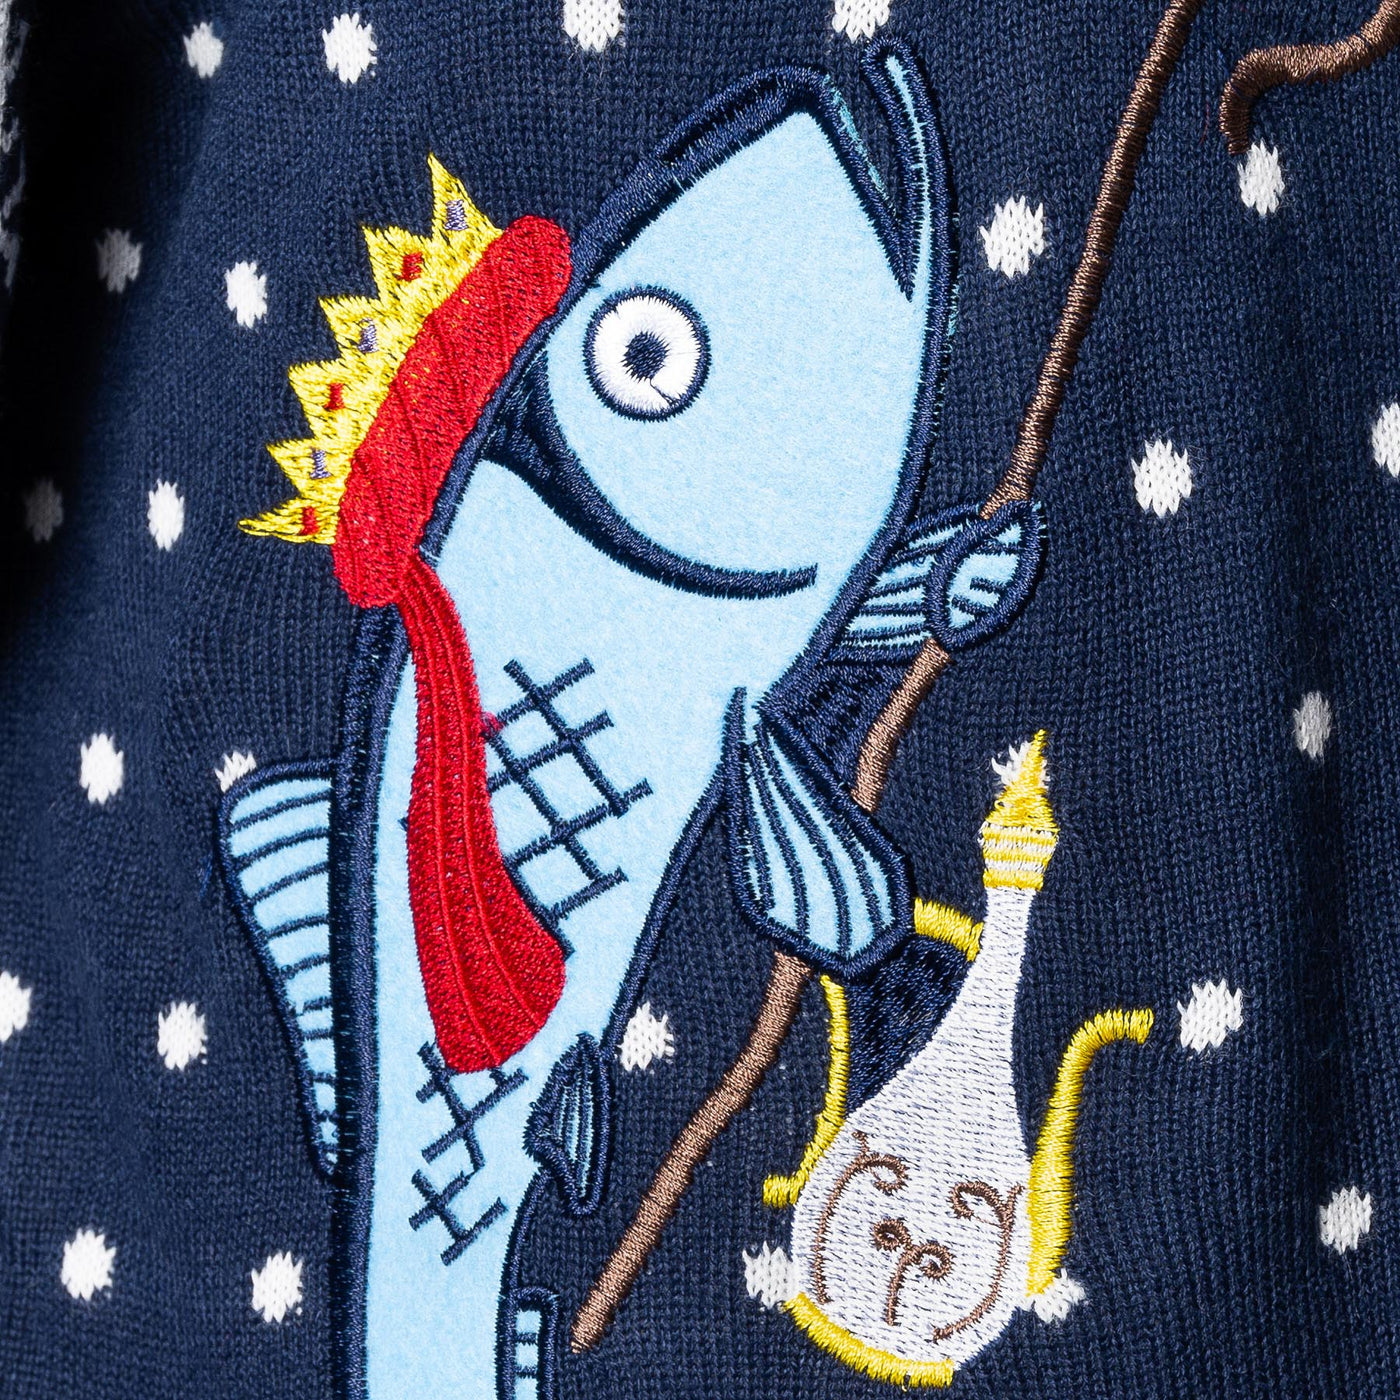 Men's Three Wise Fish Christmas Sweater